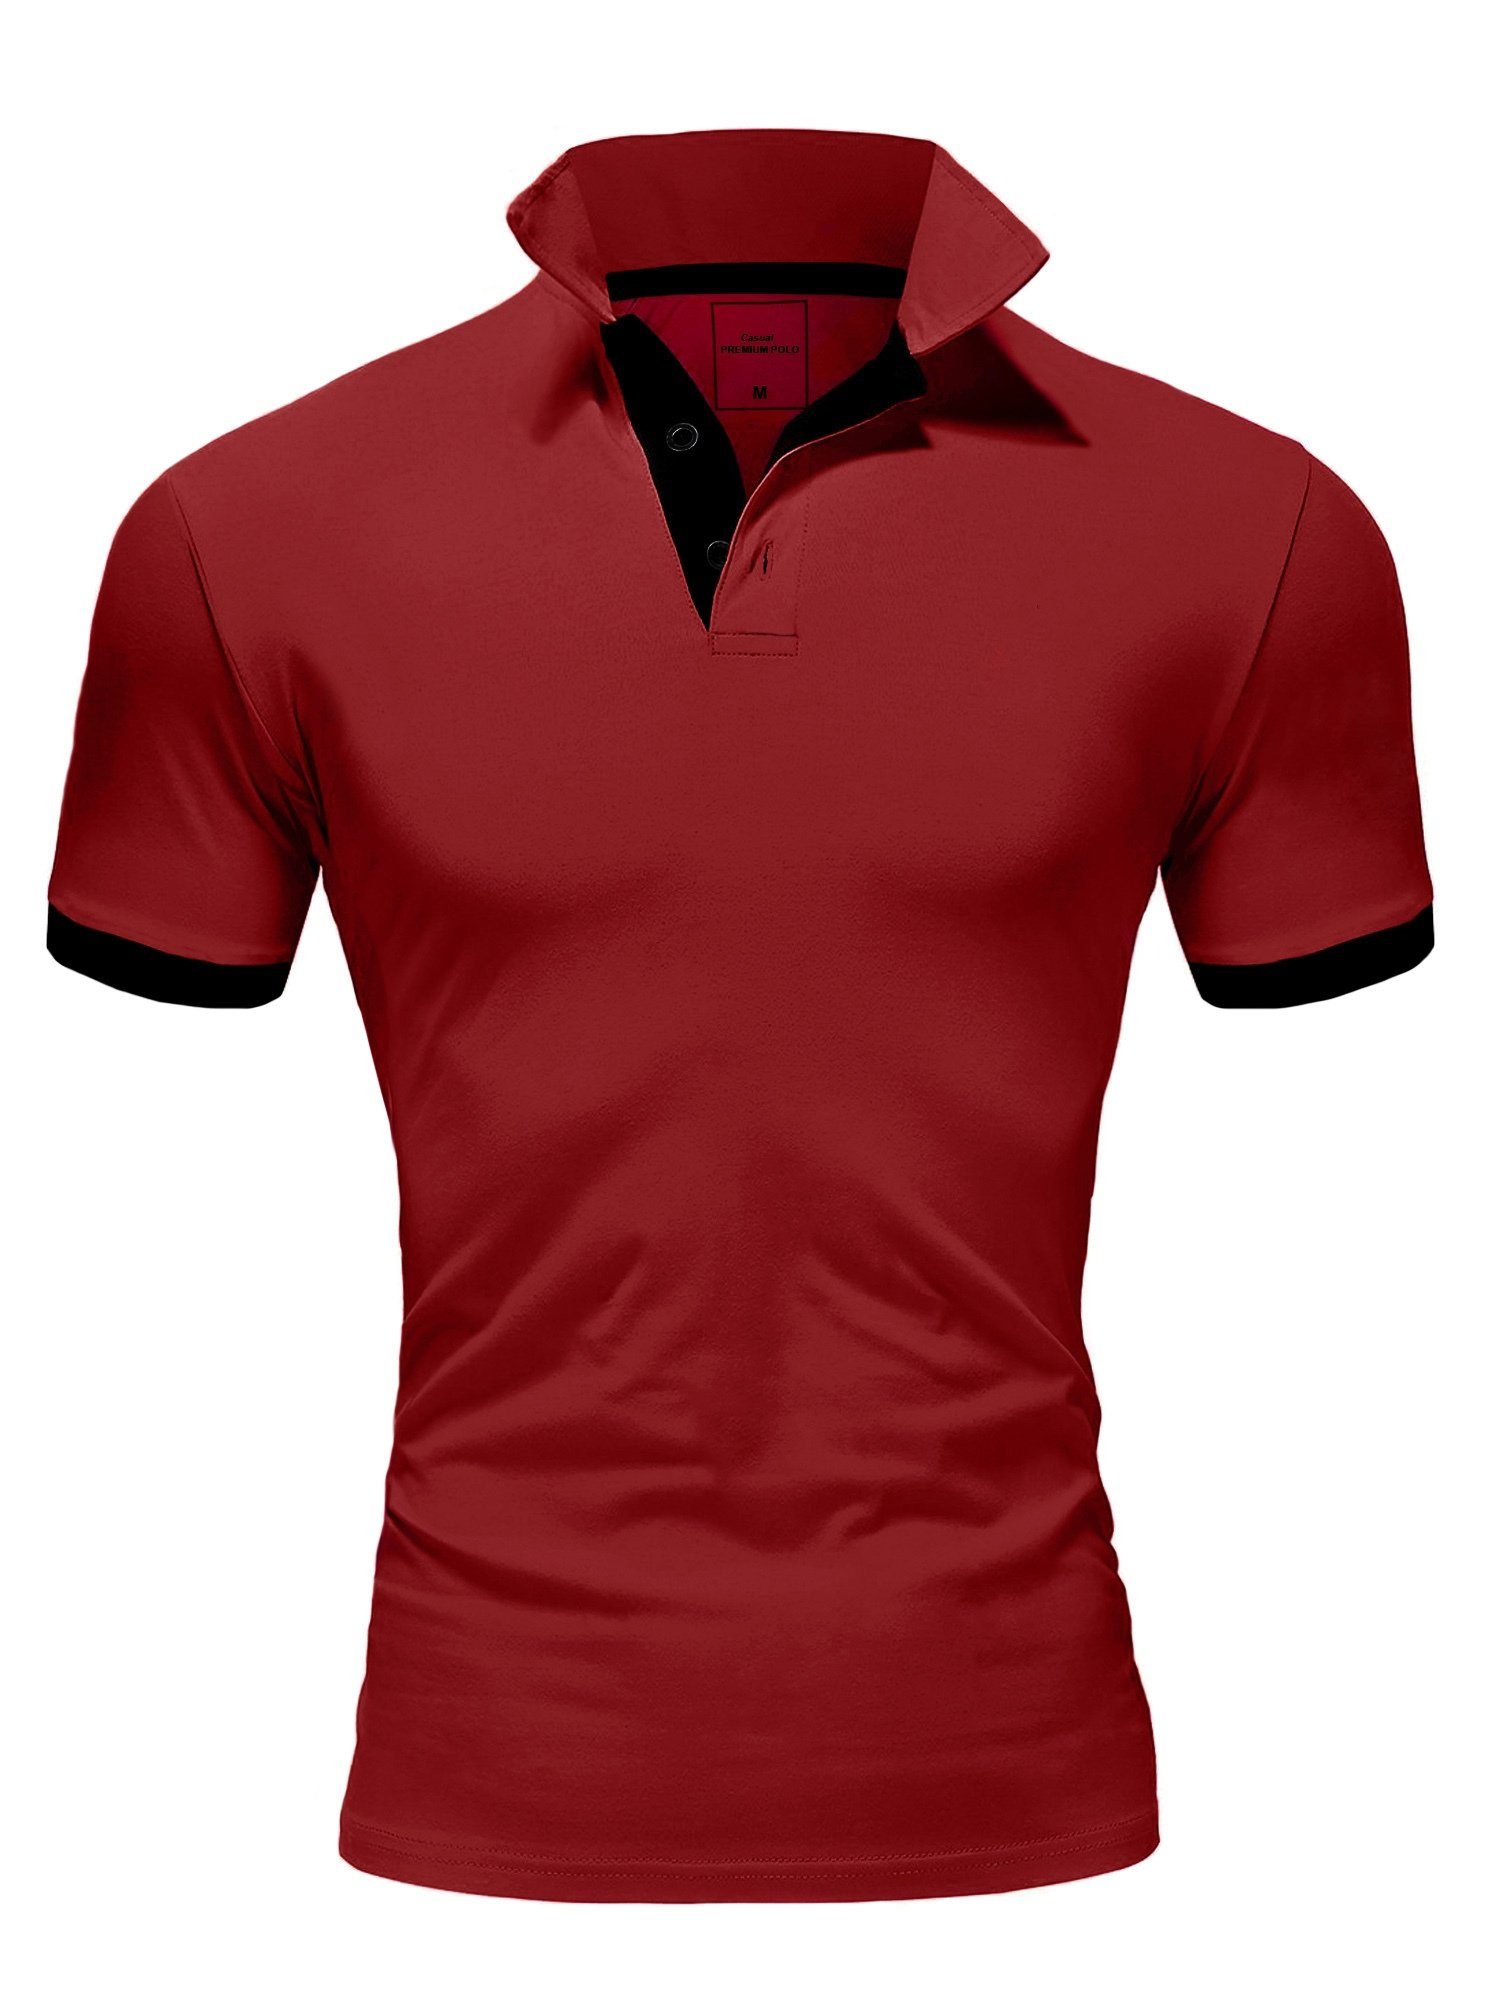 Bordeaux/Schwarz Akzenten, RONALD Herren Piqué Shirt mit in kontrastierenden REPUBLIX Qualität Poloshirt